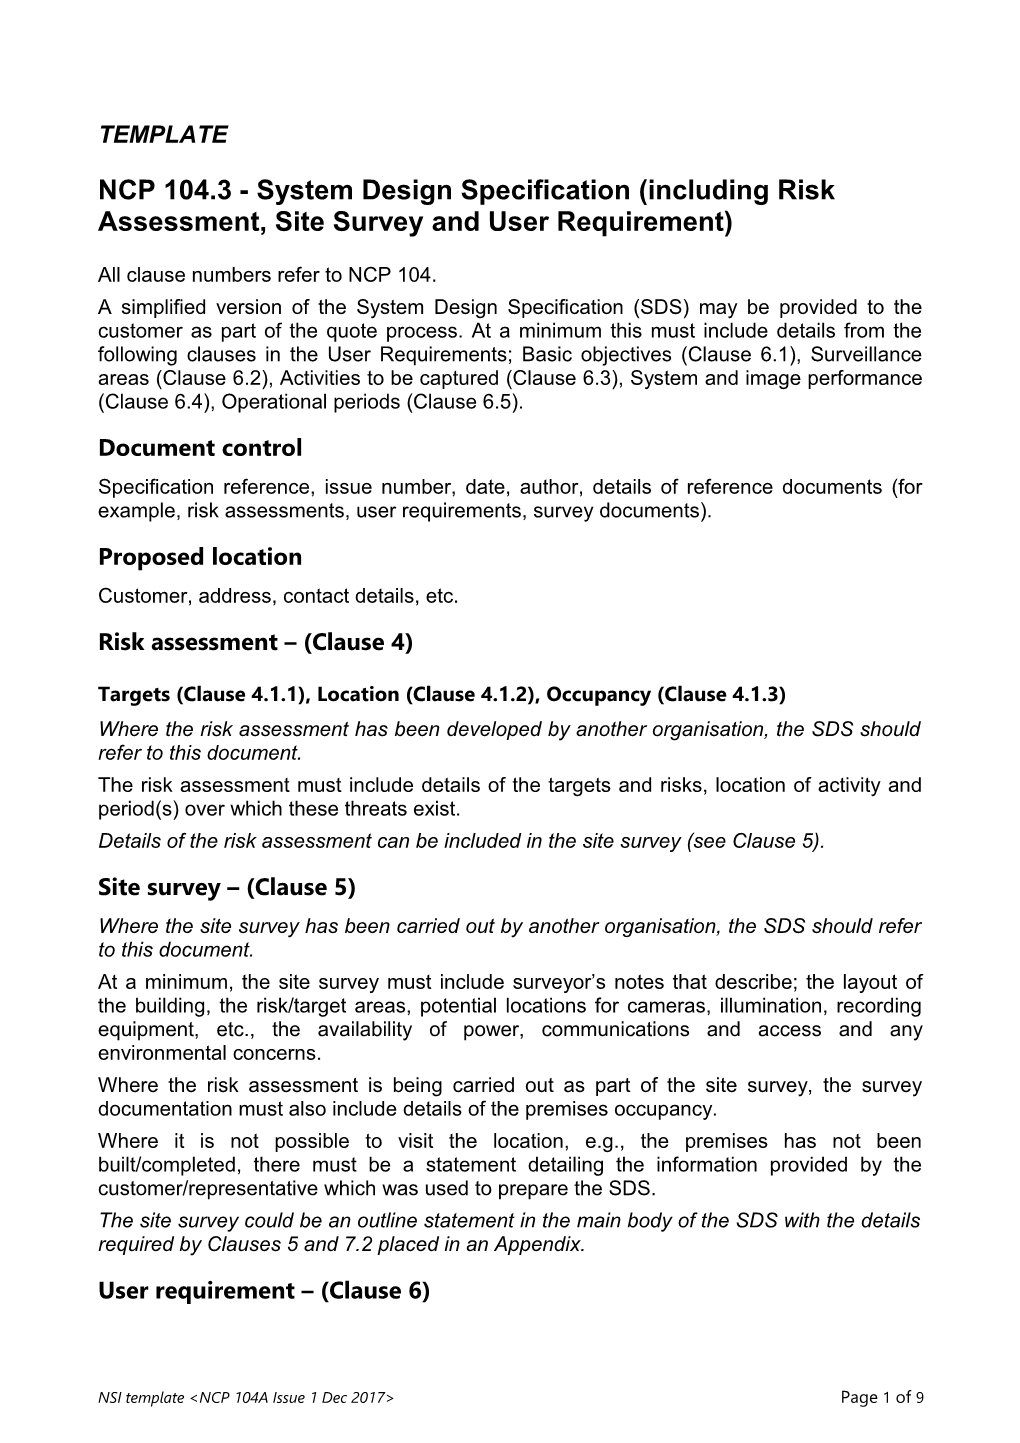 NCP 104.3 - System Design Specification (Including Risk Assessment, Site Survey and User